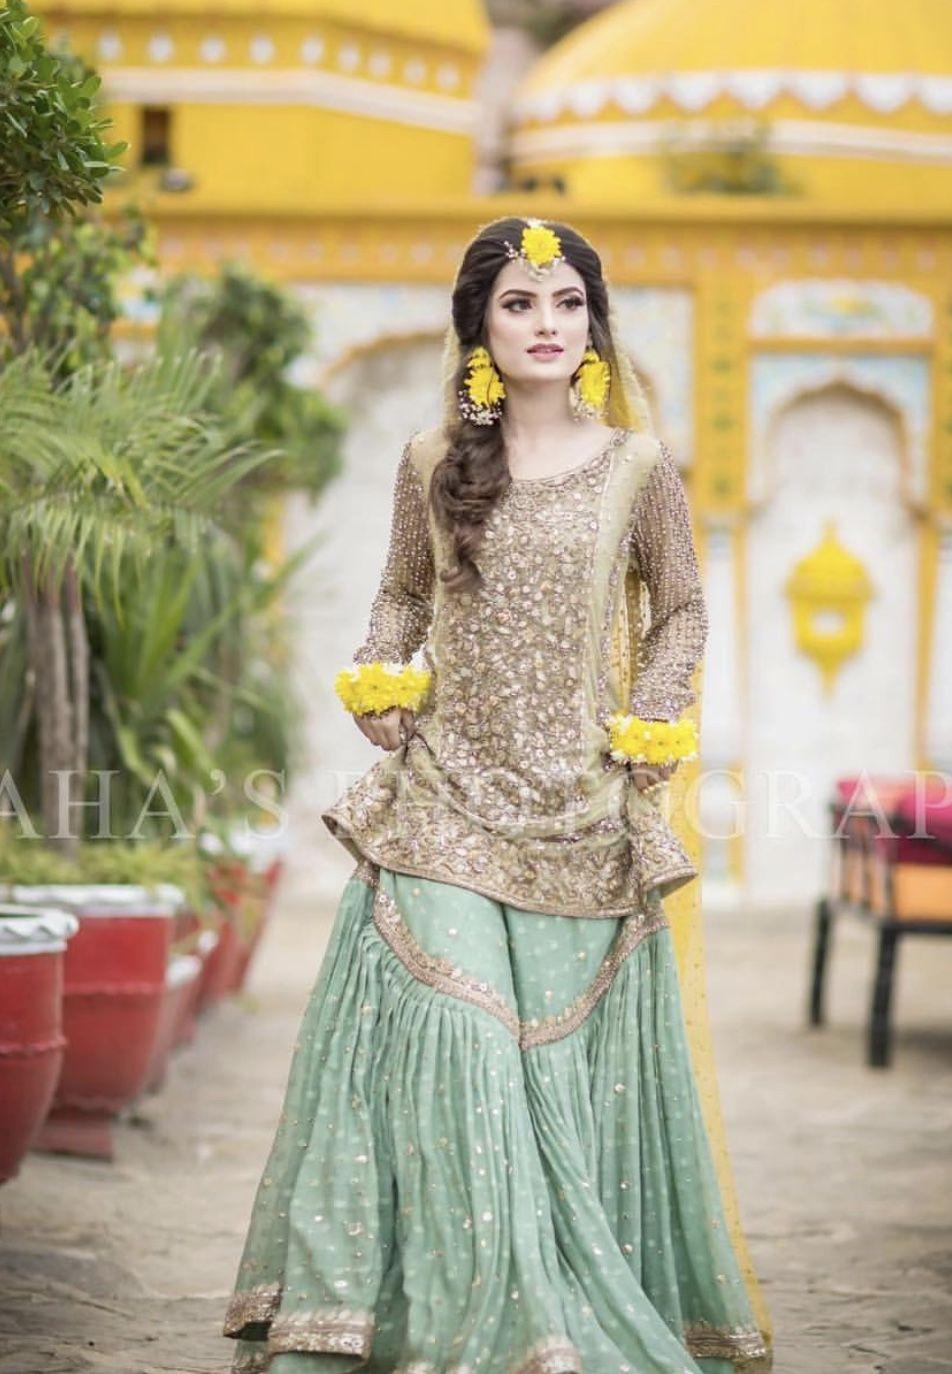 pakistani wedding clothes 2019